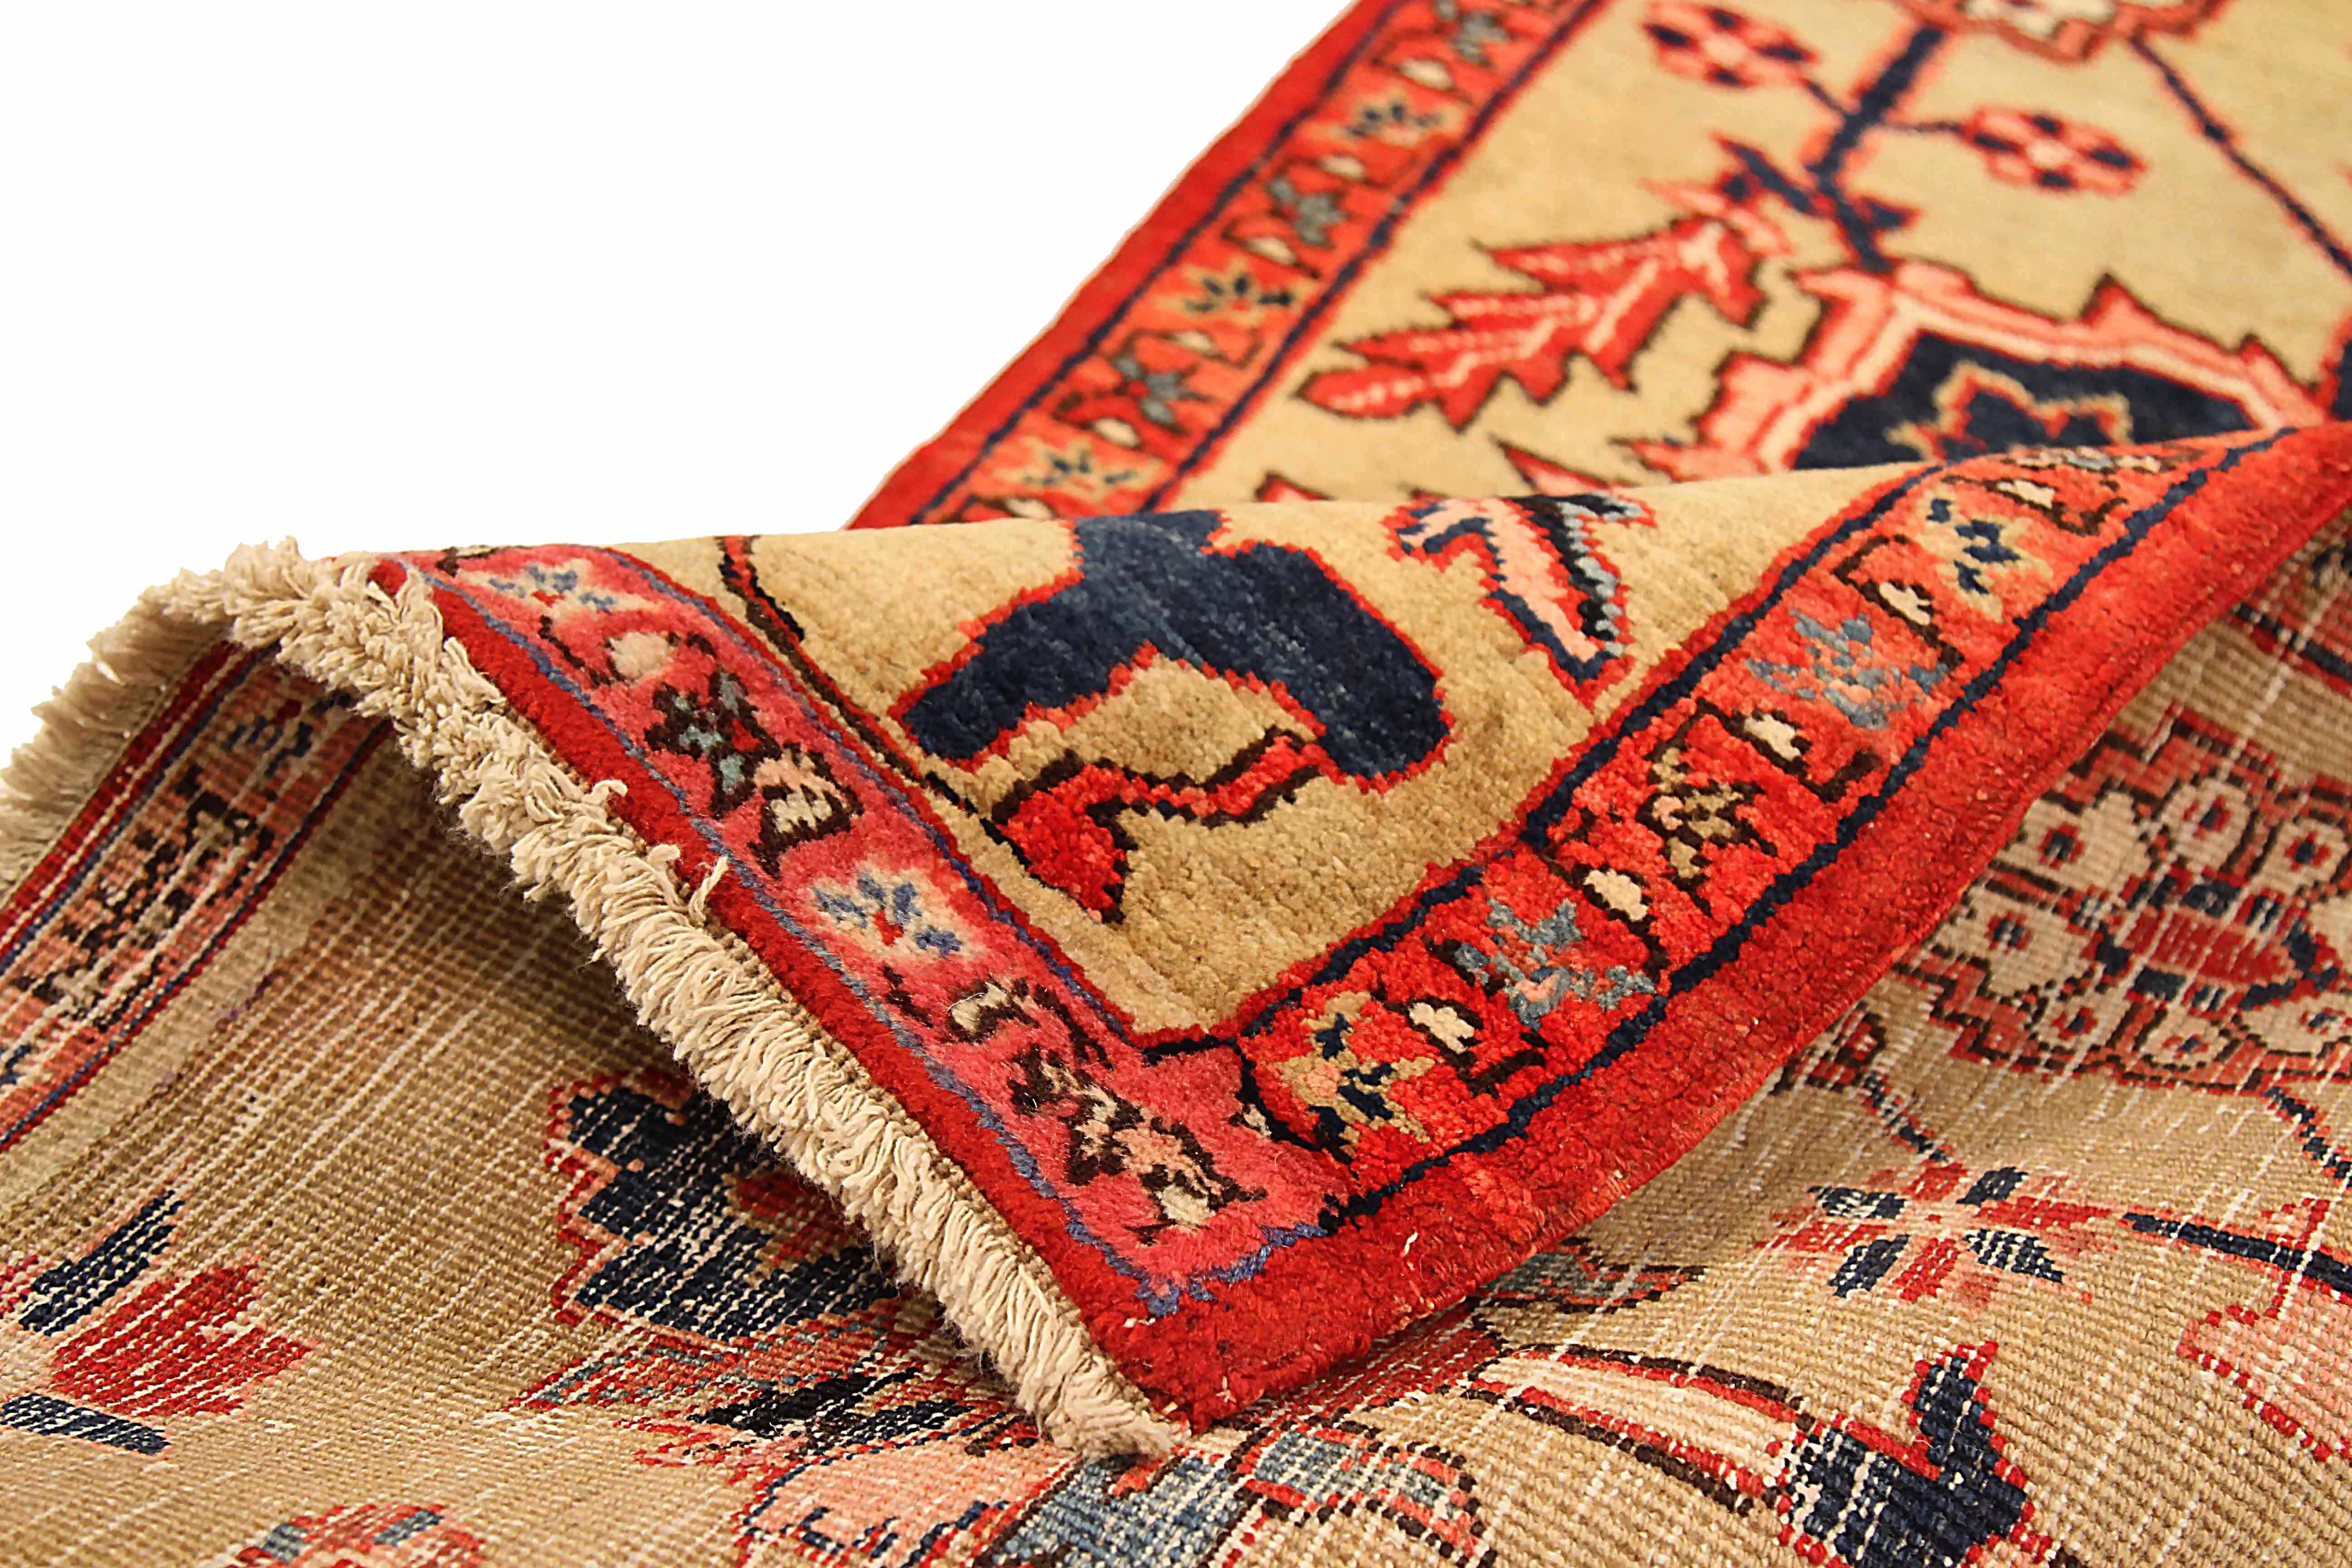 Hand-Woven Antique Persian Area Rug Heriz Design For Sale